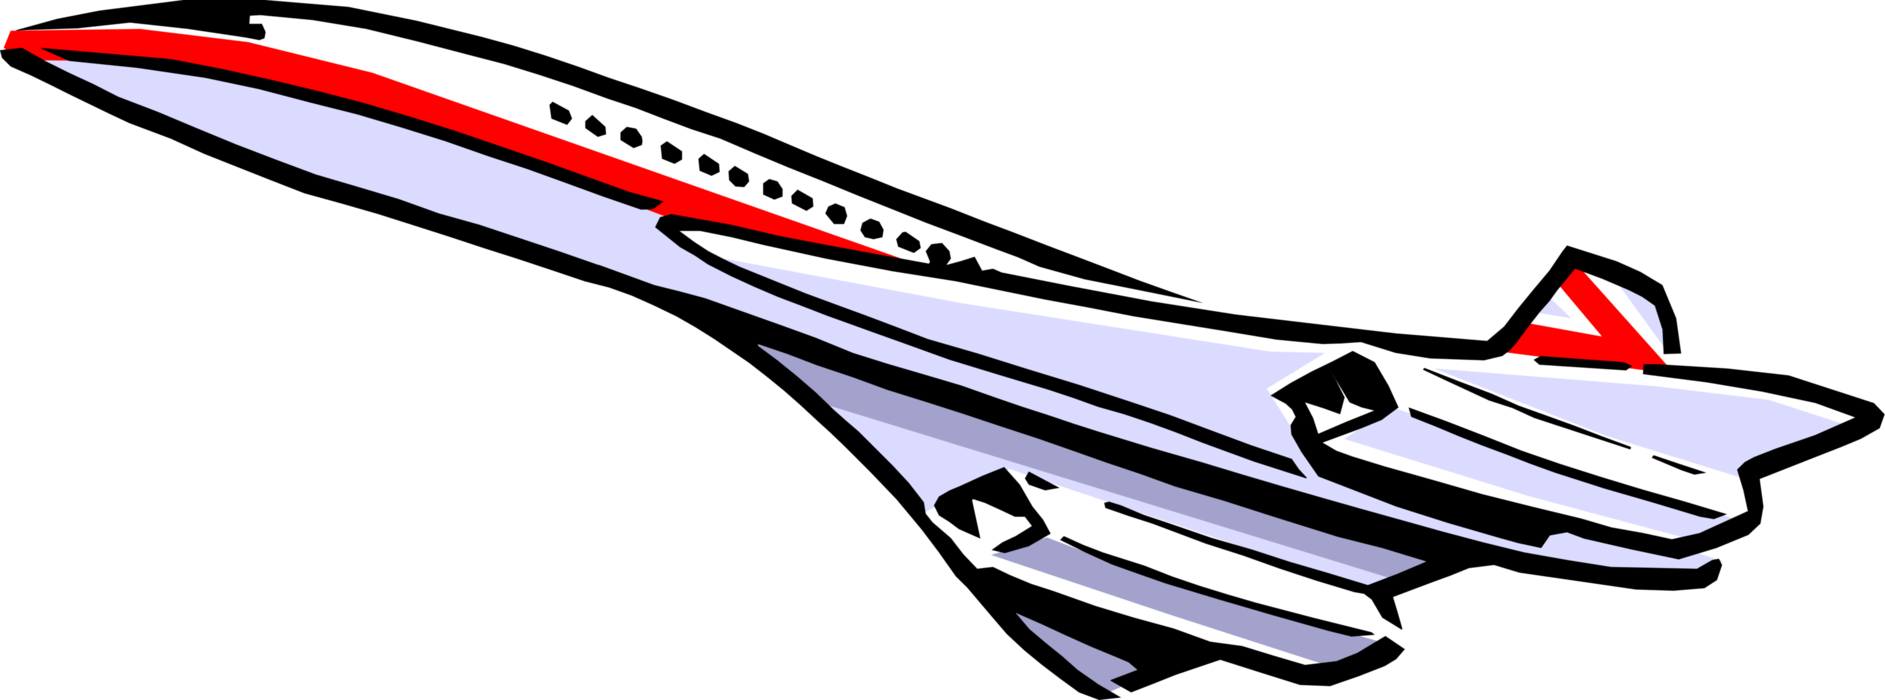 Vector Illustration of Concorde Turbojet-Powered Supersonic Passenger Jet Taking Off